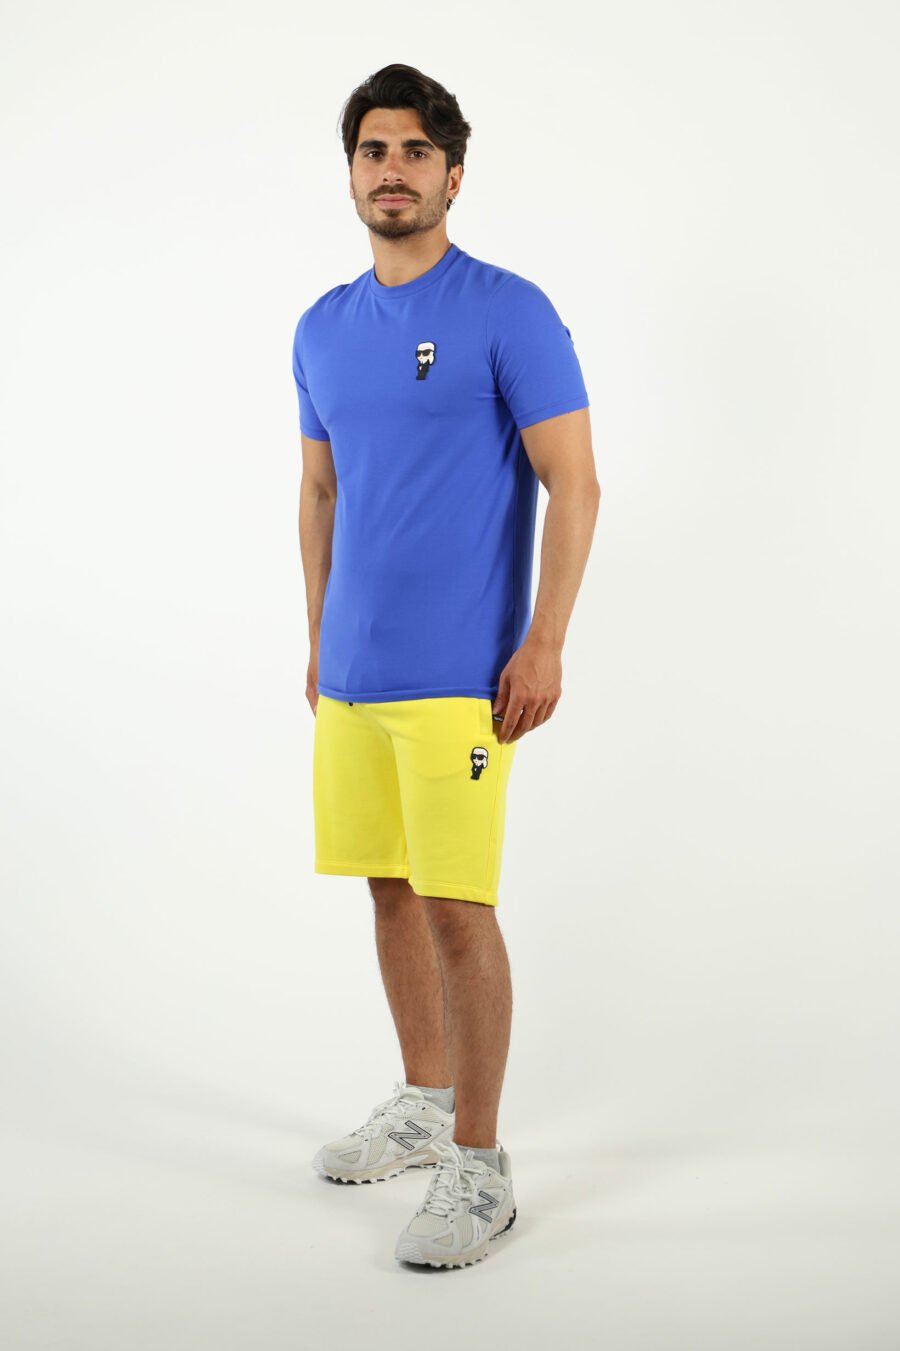 Camiseta azul eléctrico con minilogo "karl" en goma - number13977